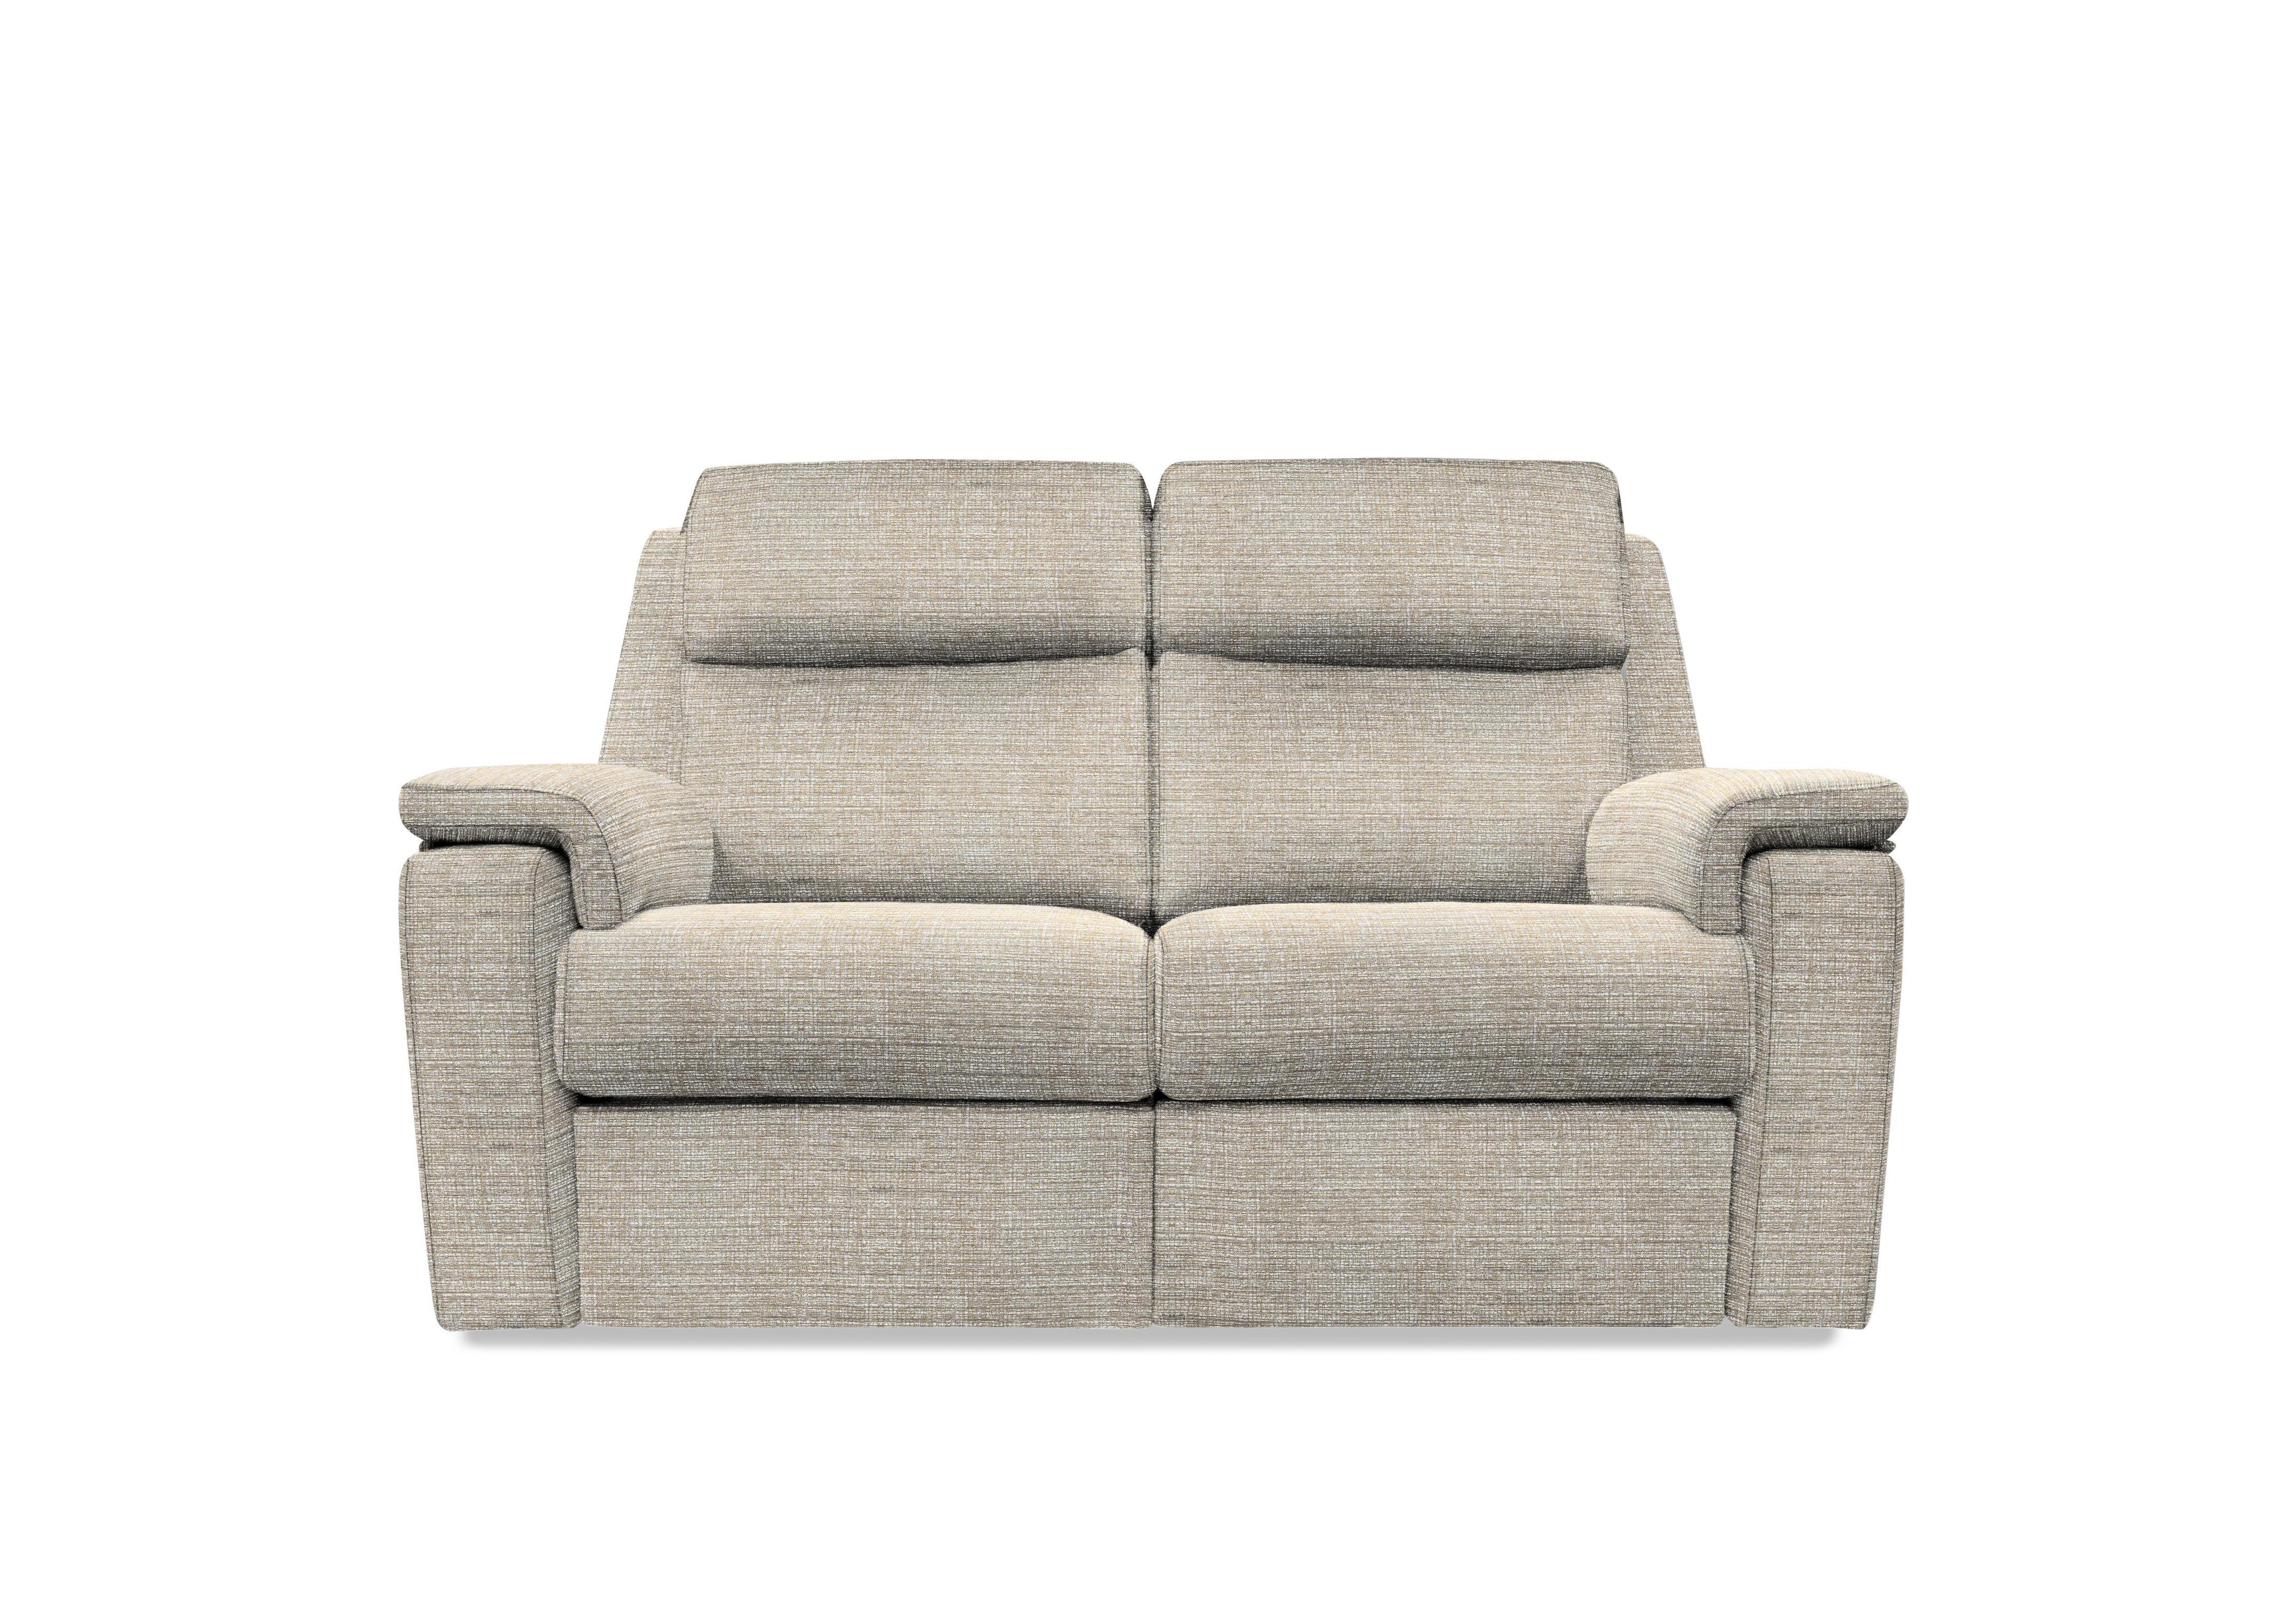 Thornbury 2 Seater Fabric Sofa in A006 Yarn Shale on Furniture Village